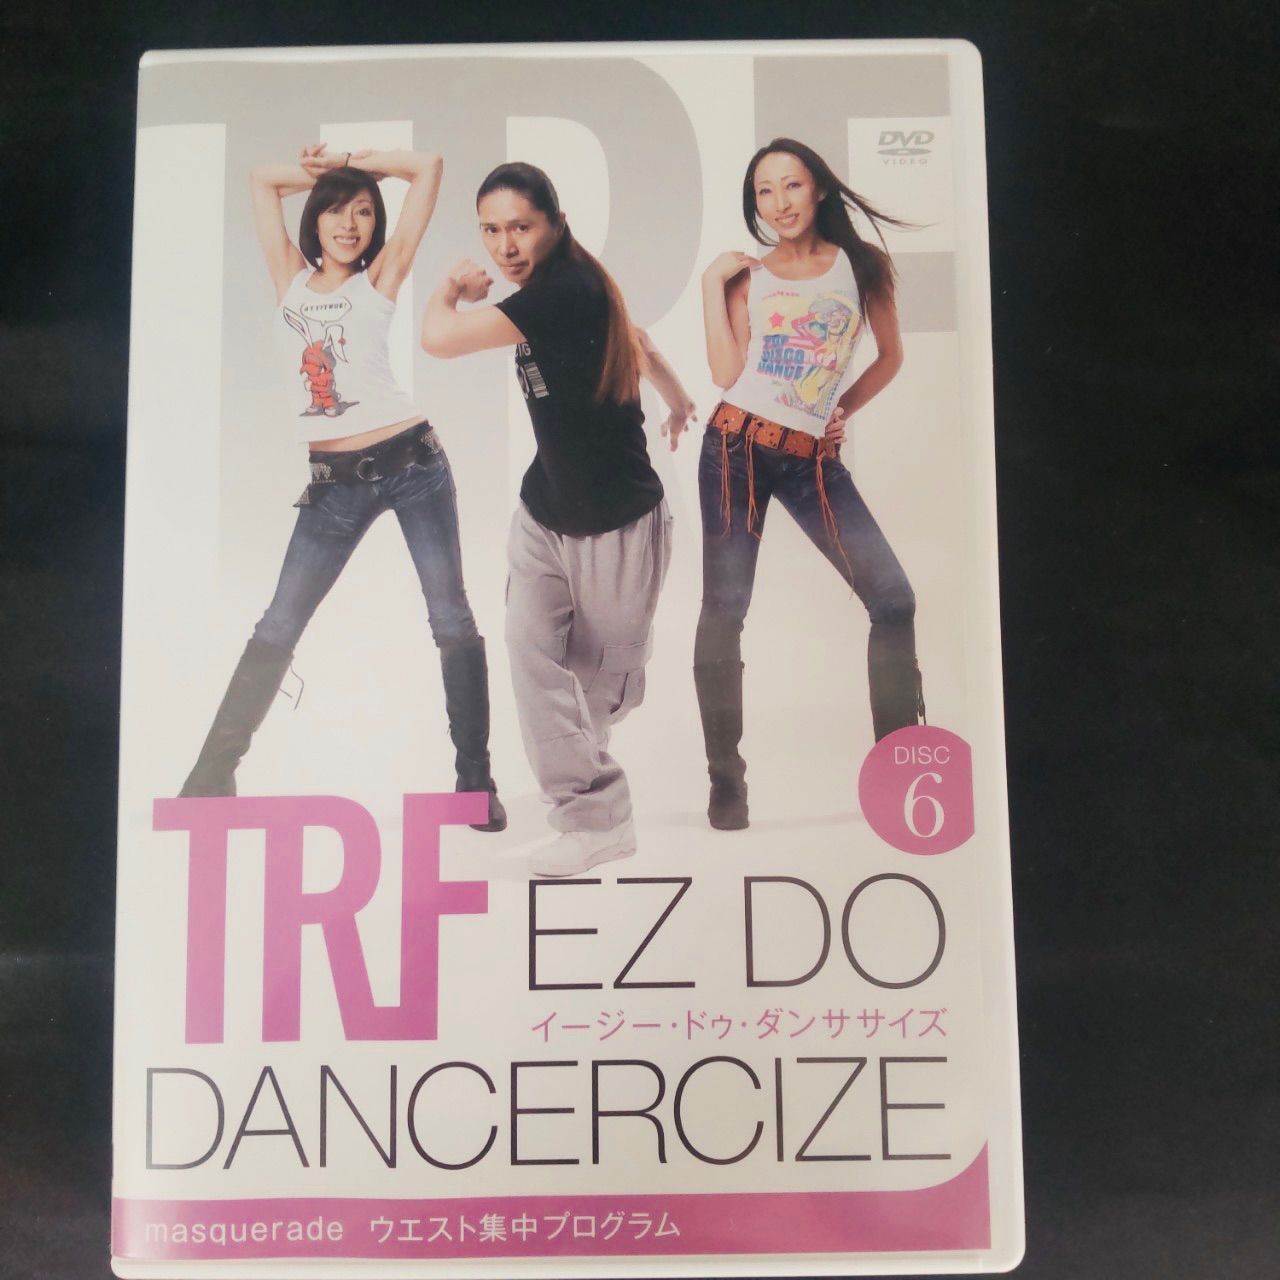 TRF EZ DO DANCERCIZE DVD3枚セット - スポーツ・フィットネス